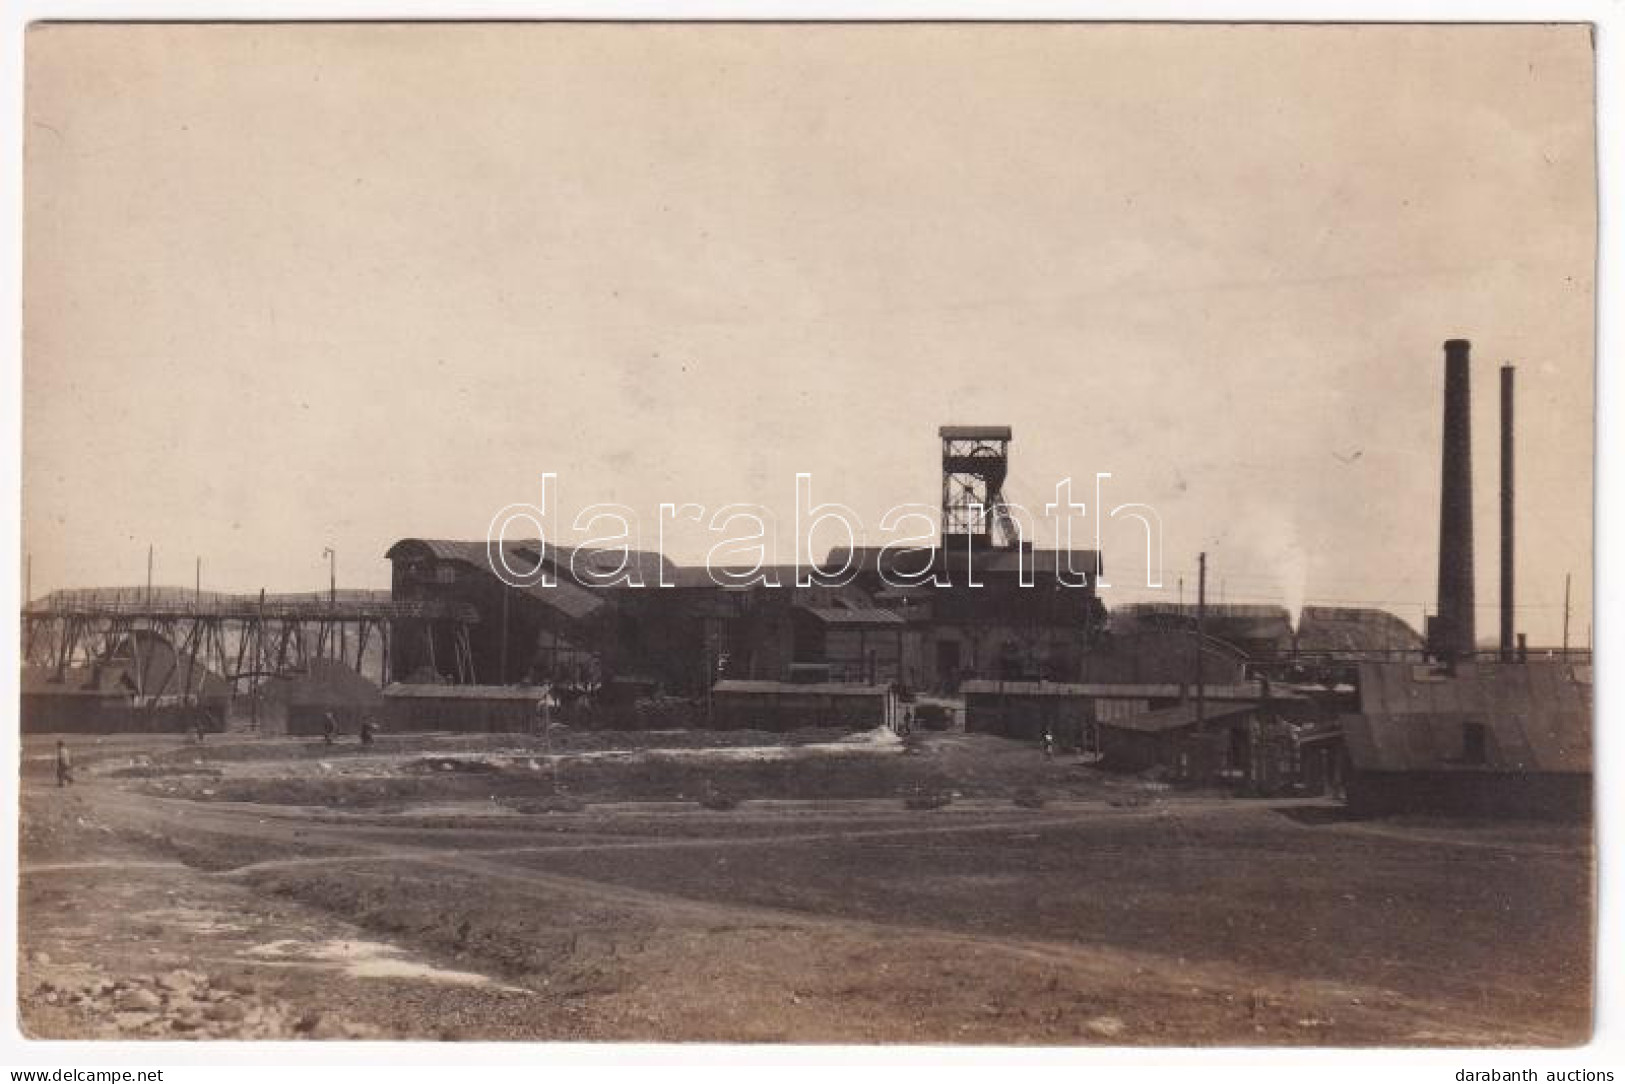 * T4 1918 Rutschenkovo, Rutschenkowo; Szénbánya / Coal Mine. Photo (cut) - Non Classés